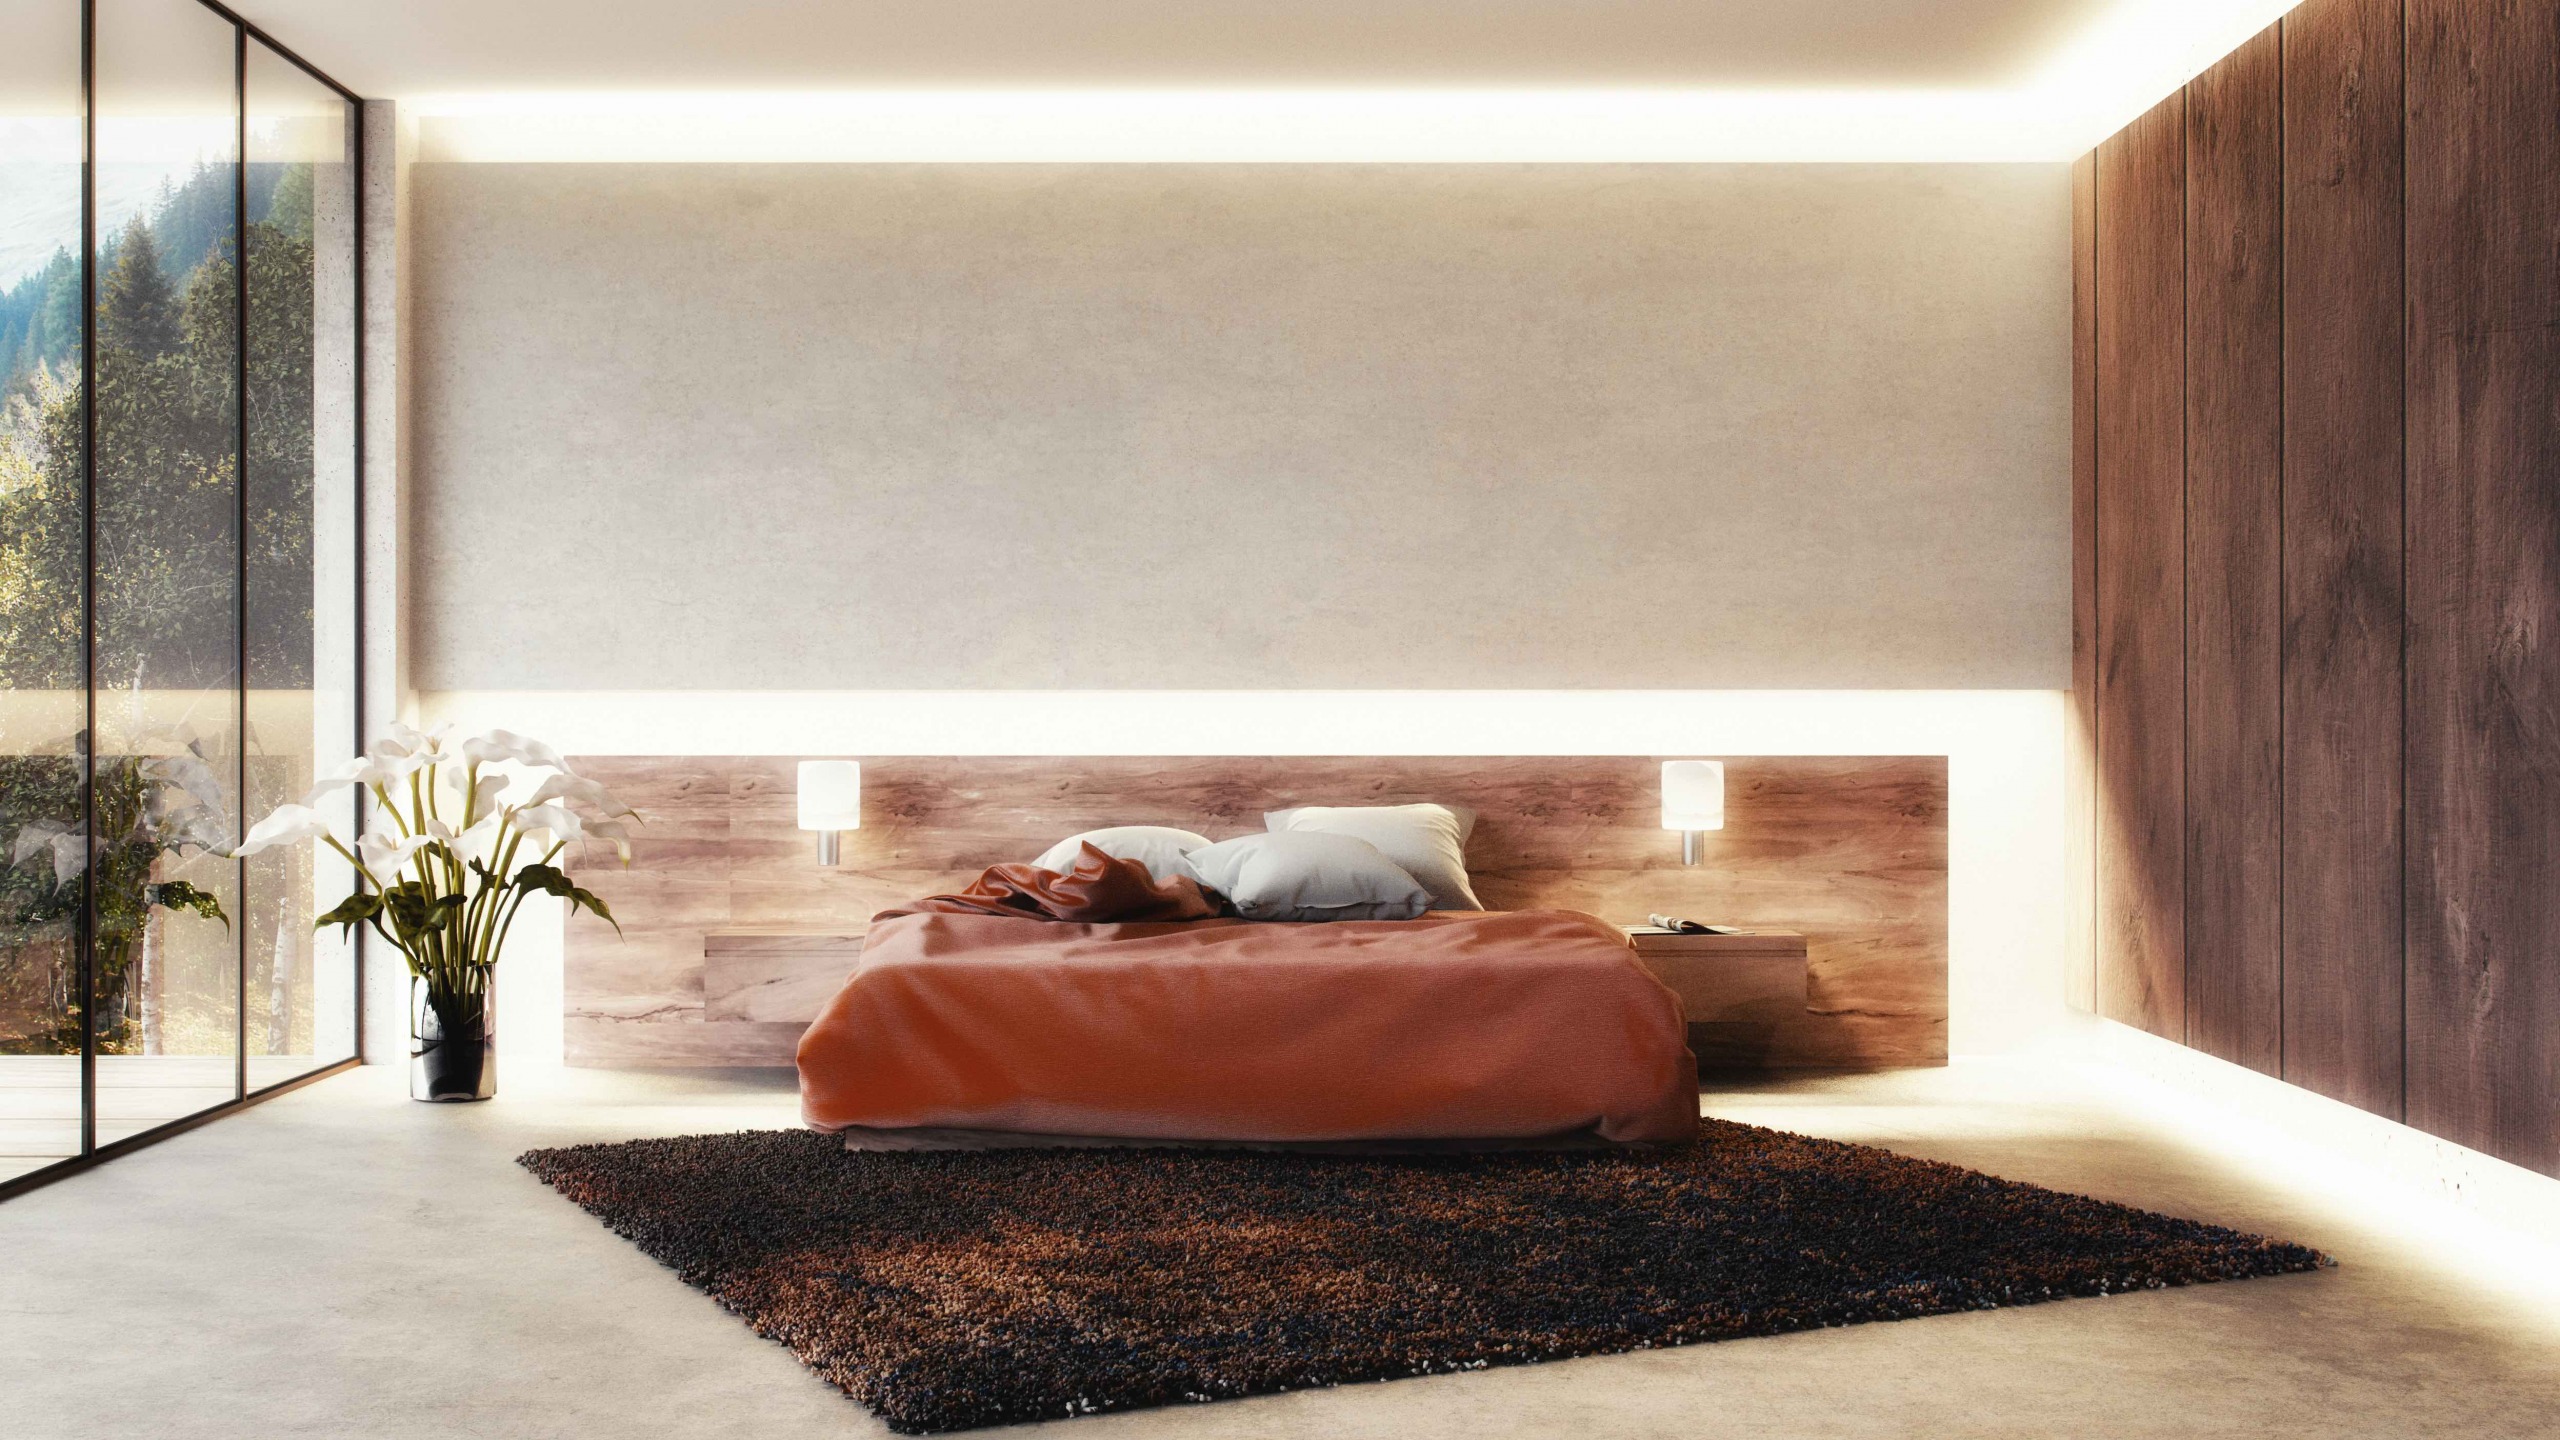 Licht Effekt Decken Leuchten Wohn Schlaf Raum Beleuchtung Flur Dielen Lampe Holz